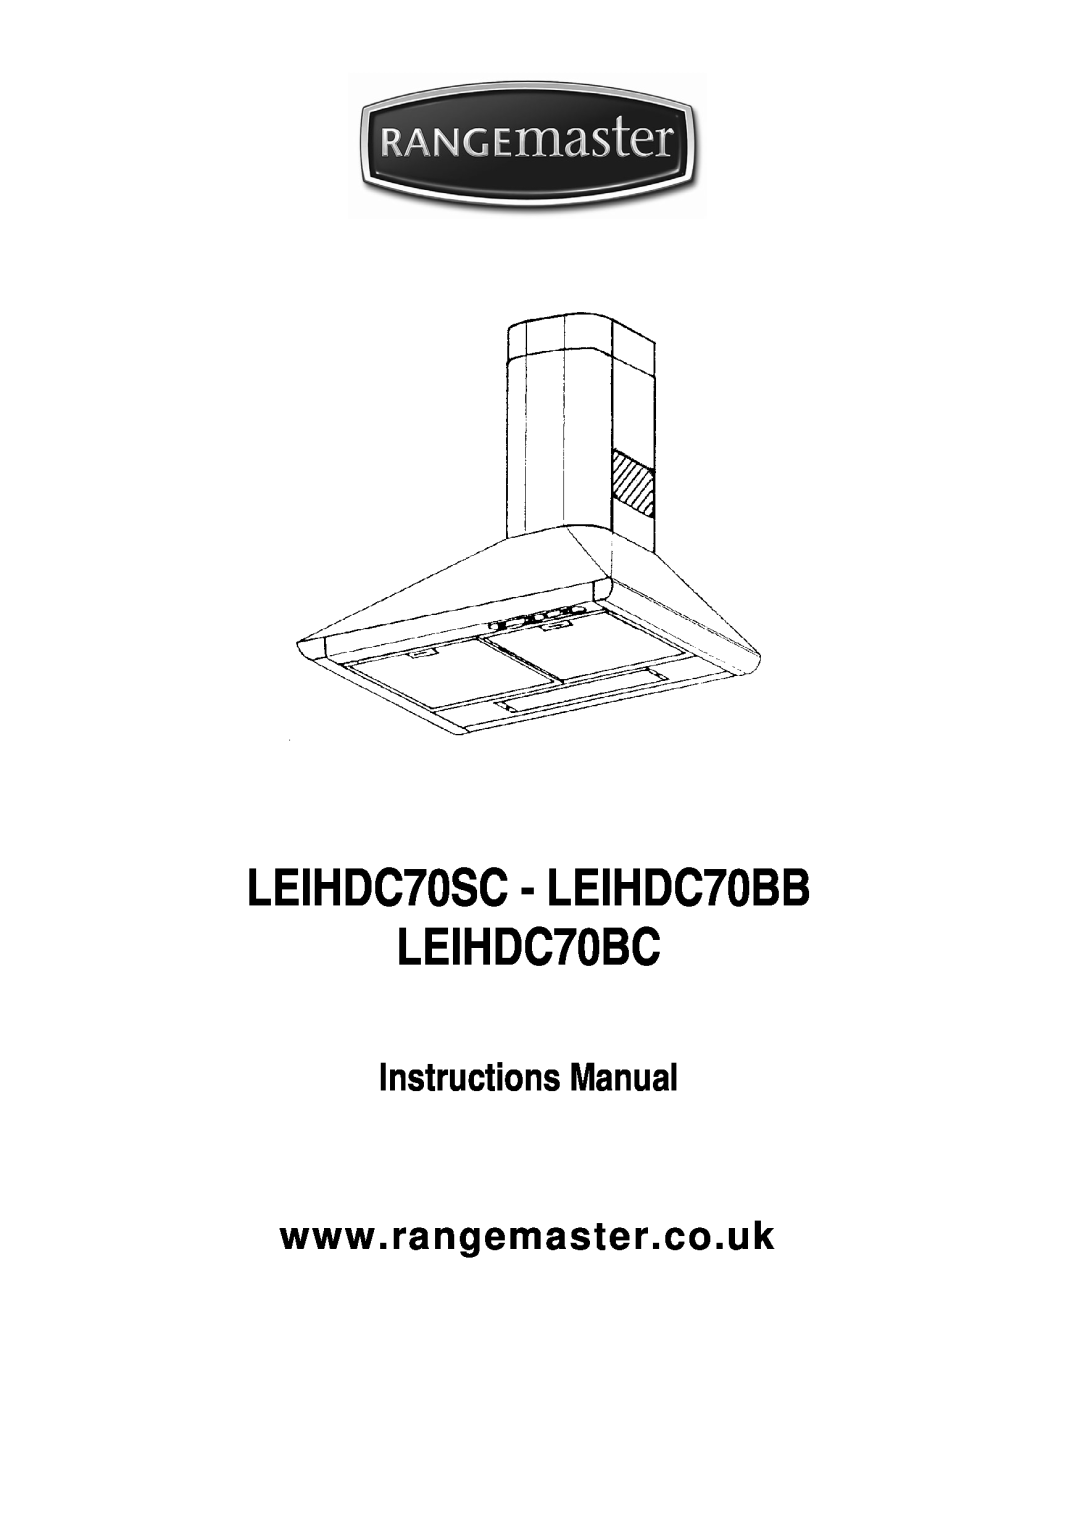 Rangemaster manual LEIHDC70SC - LEIHDC70BB LEIHDC70BC 